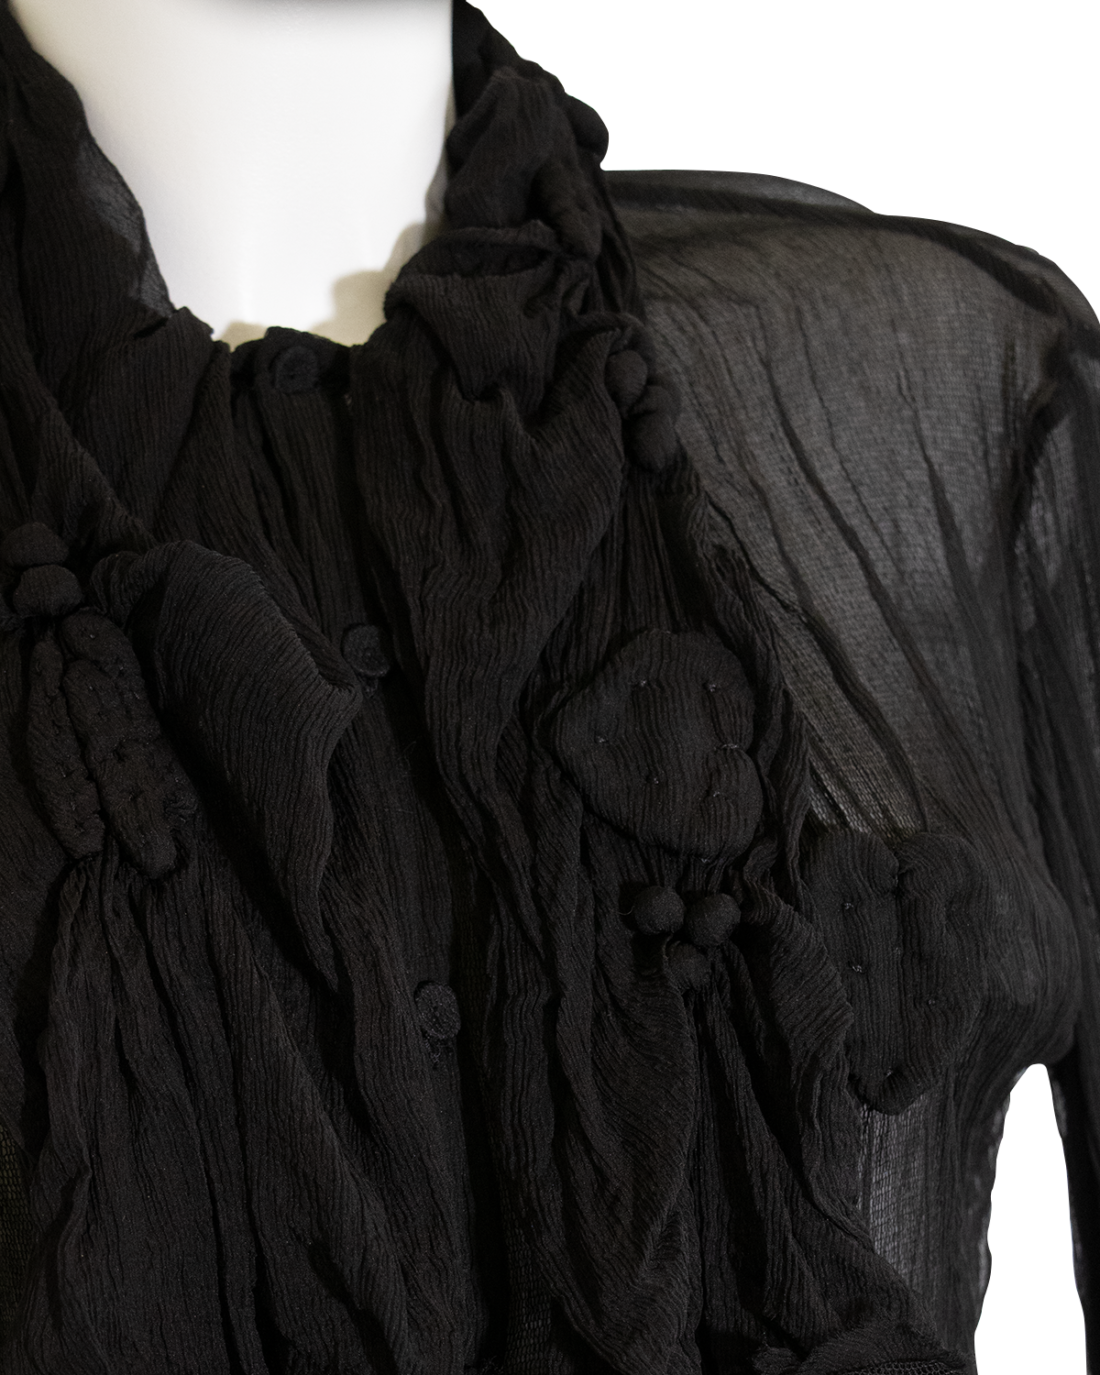 Jean Paul Gaultier Black Shirt from 1990s